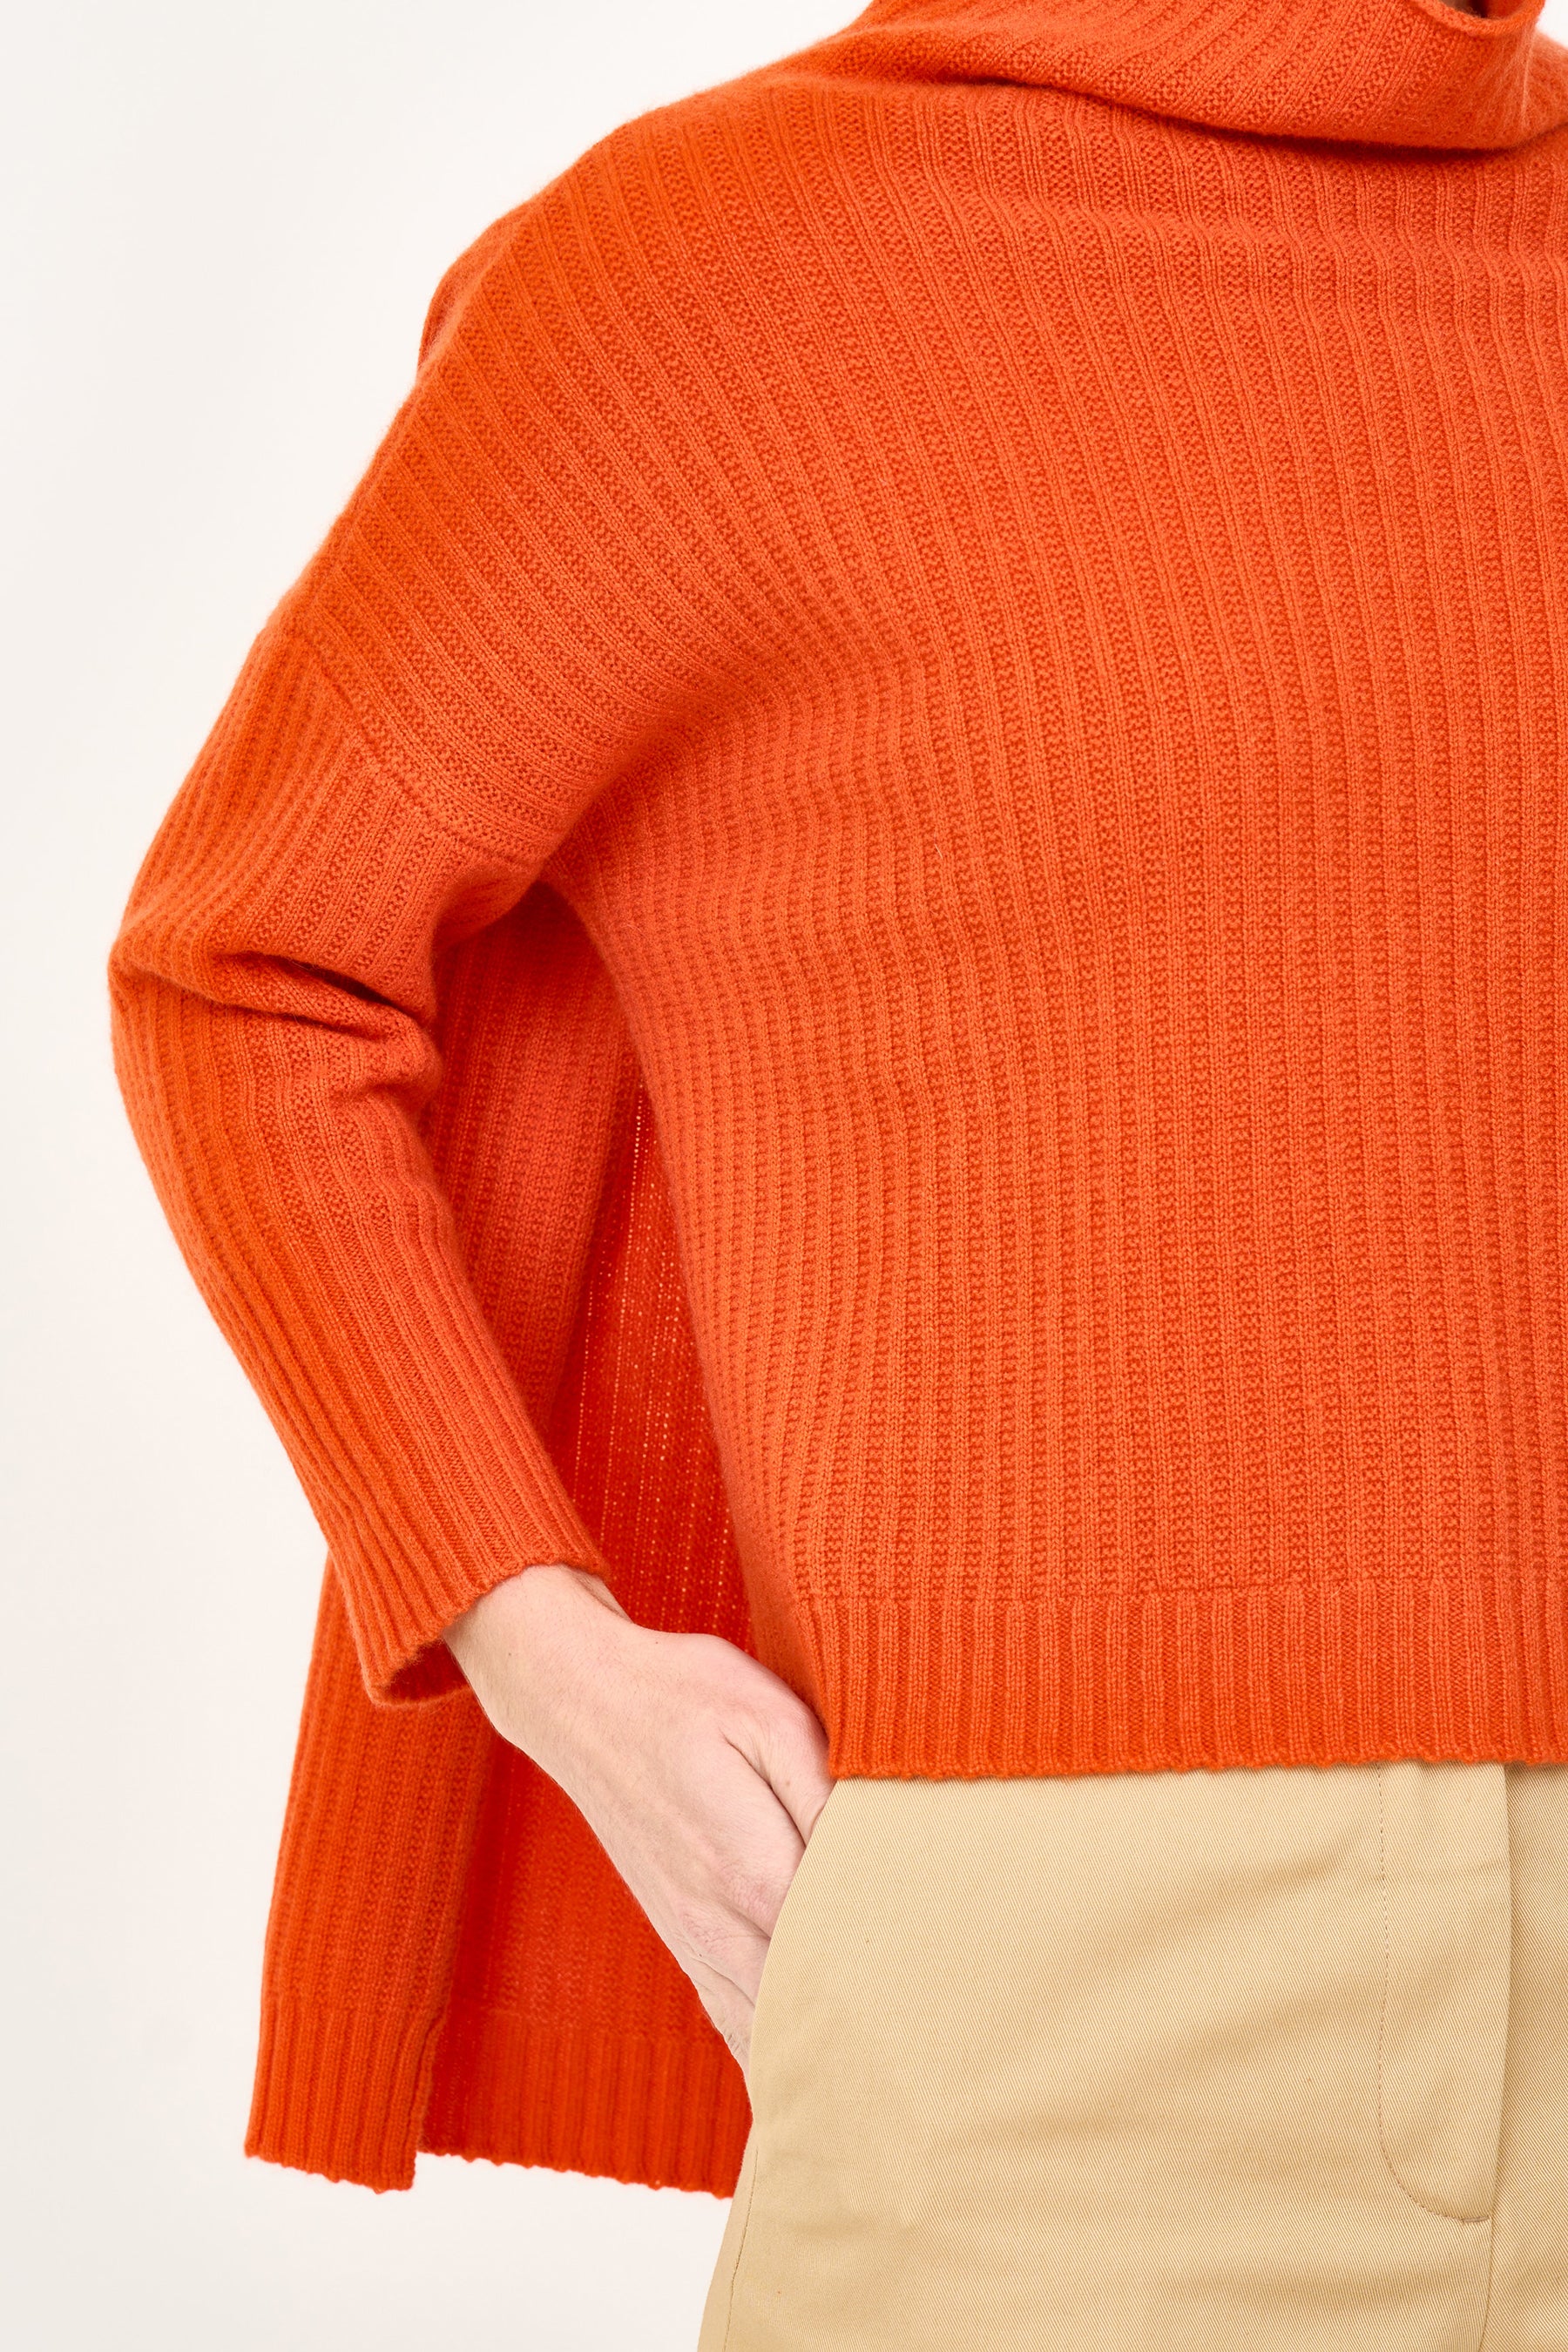 Everly Sweater - Orange